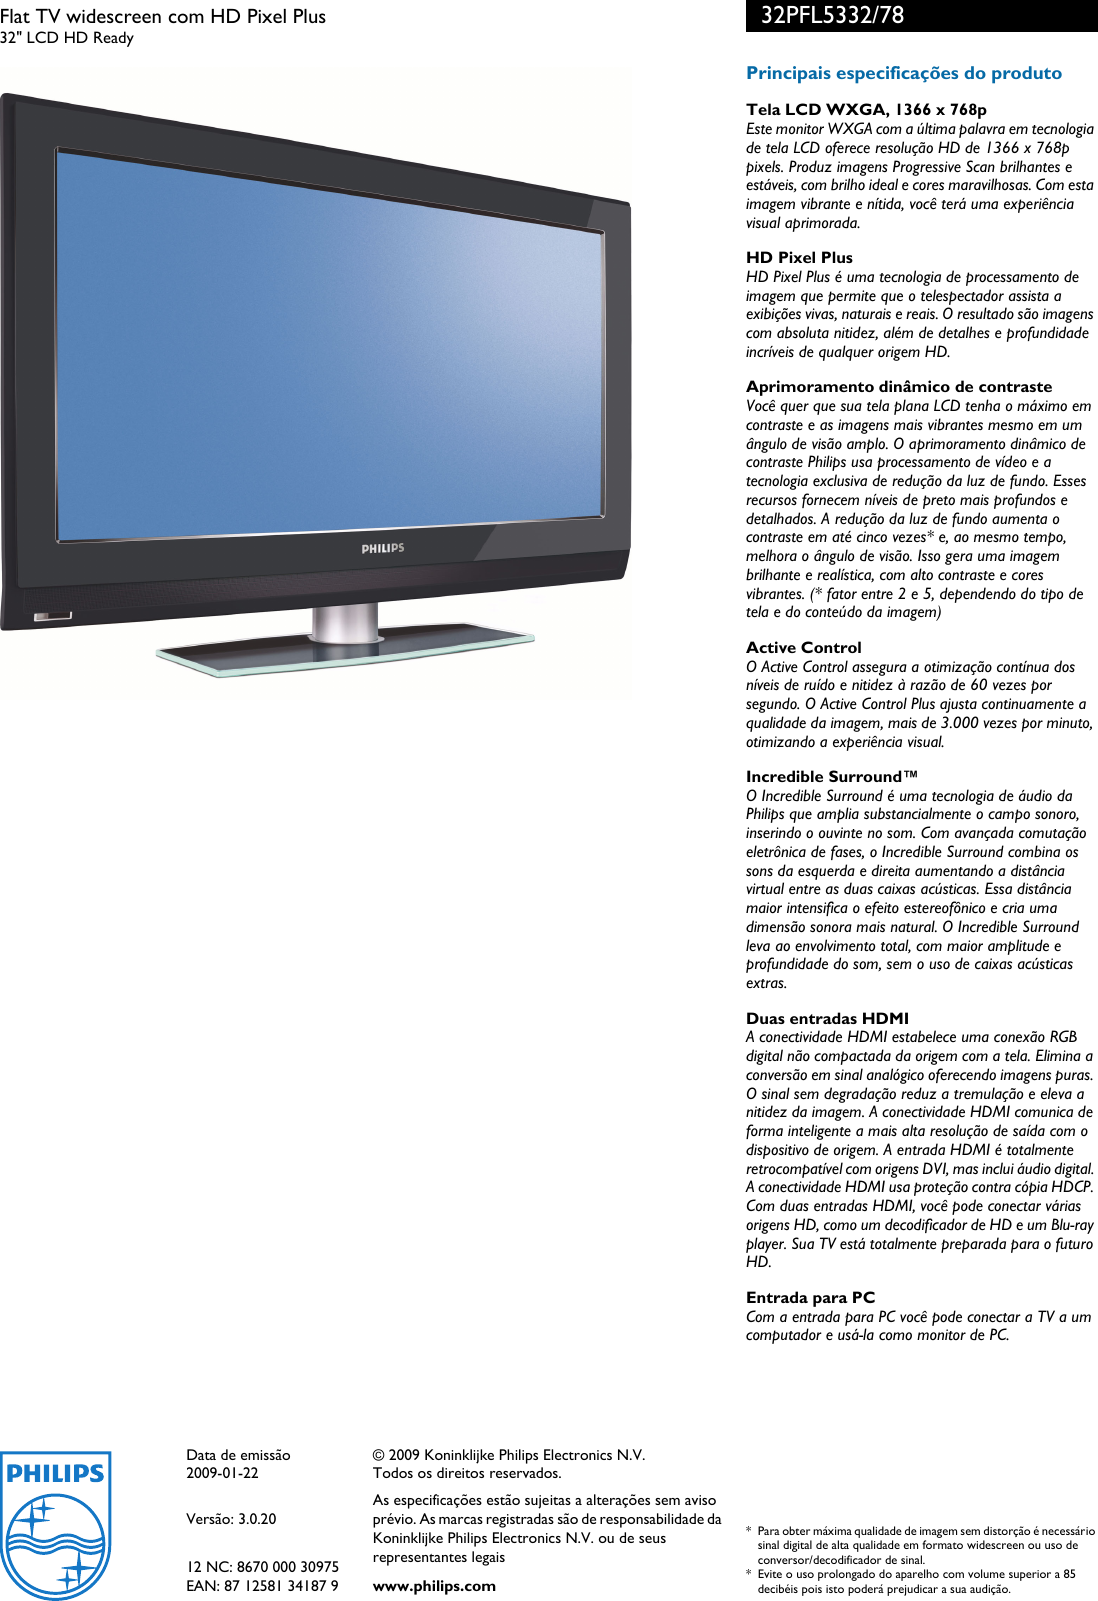 Page 3 of 3 - Philips 32PFL5332/78 Flat TV Widescreen Com HD Pixel Plus User Manual Folheto 32pfl5332 78 Pss Brpbr